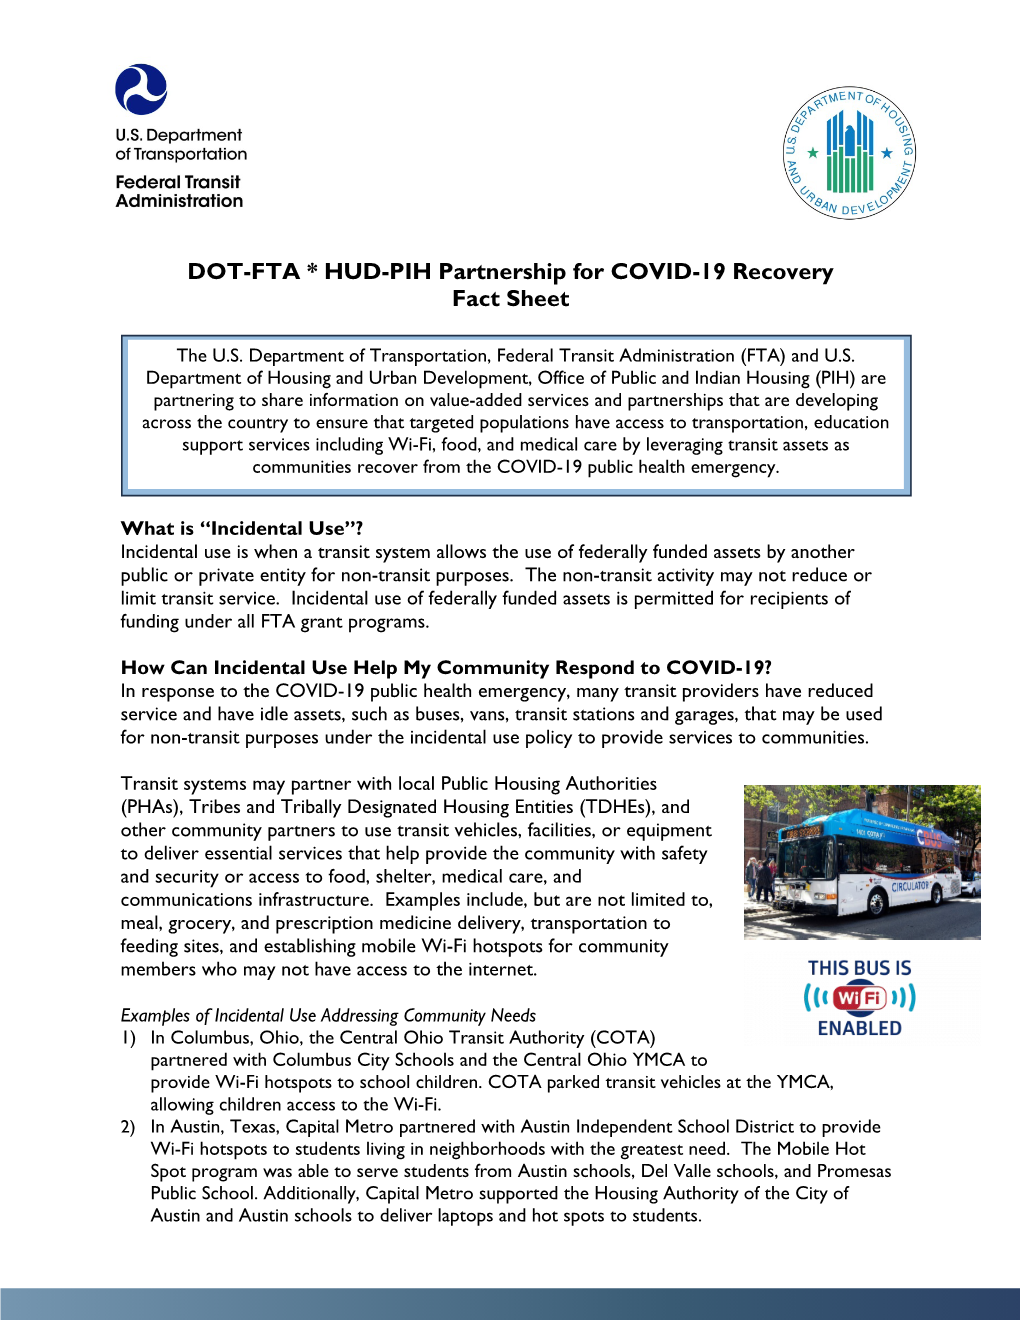 DOT-FTA HUD-PIH Partnership for COVID-19 Recovery Fact Sheet